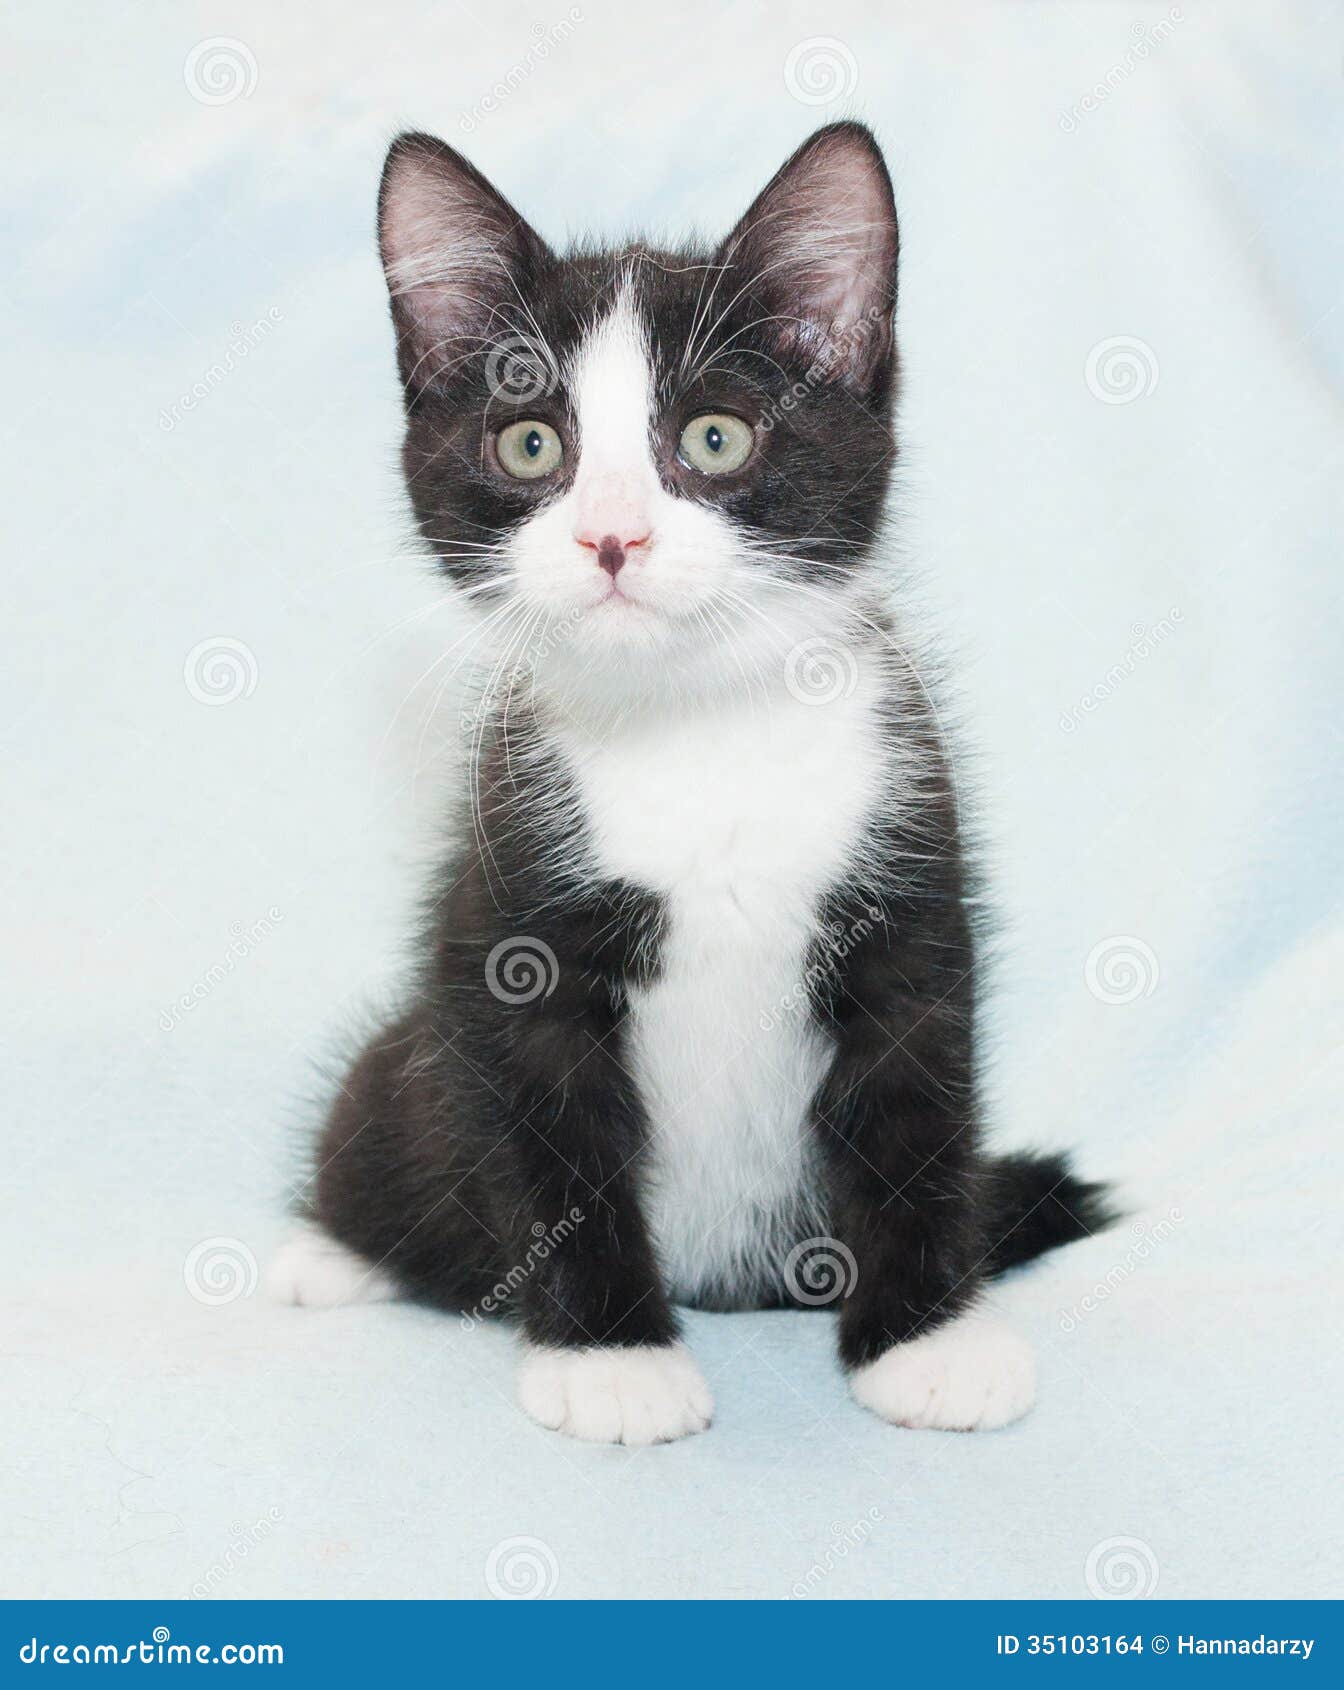 Black And White Fluffy Kitten Sitting Stock Images - Image: 35103164